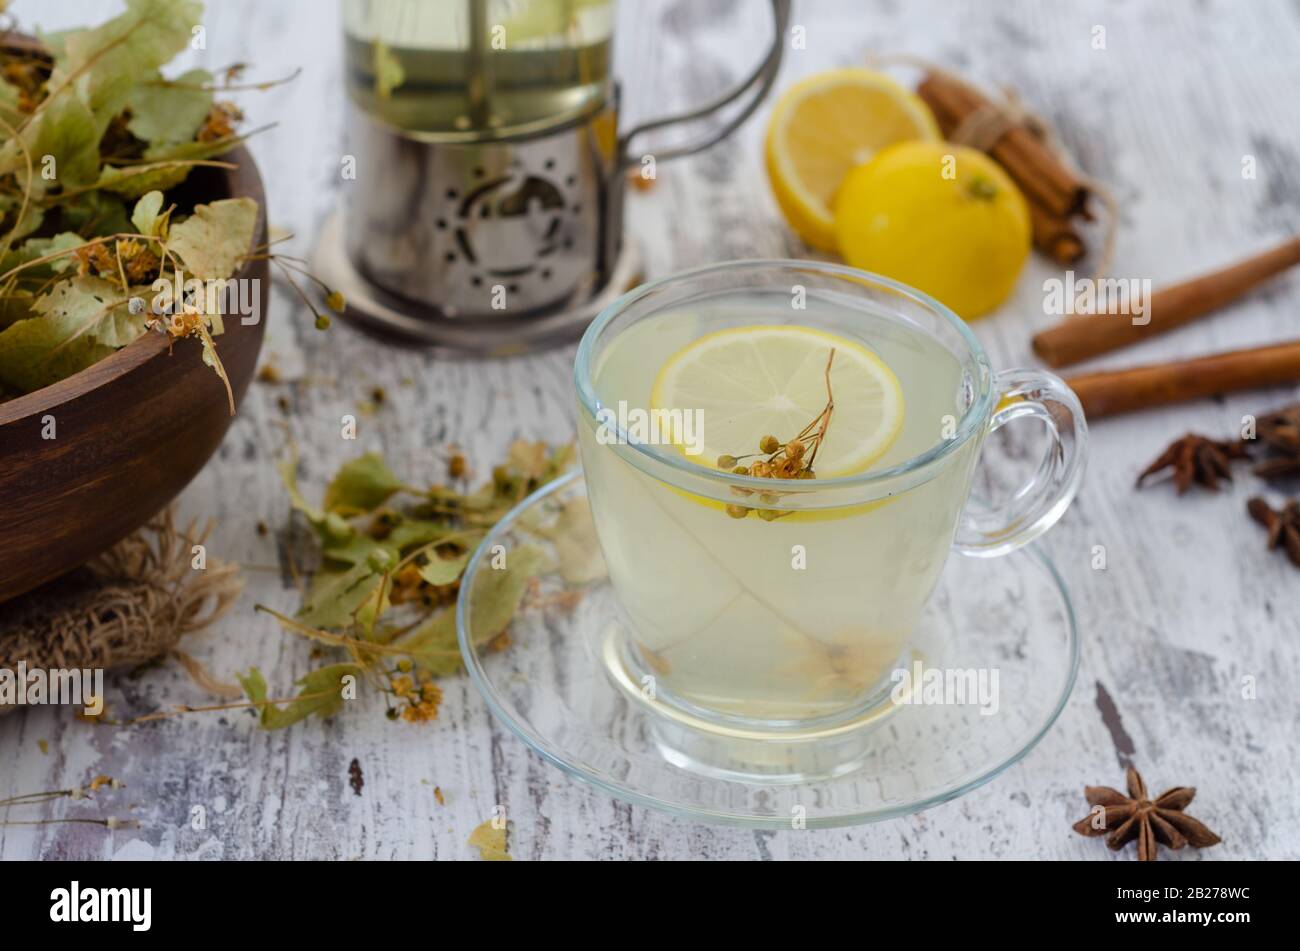 Linden and linden tea. Herbal tea made from linden. Detox herbal tea on wooden table. Stock Photo